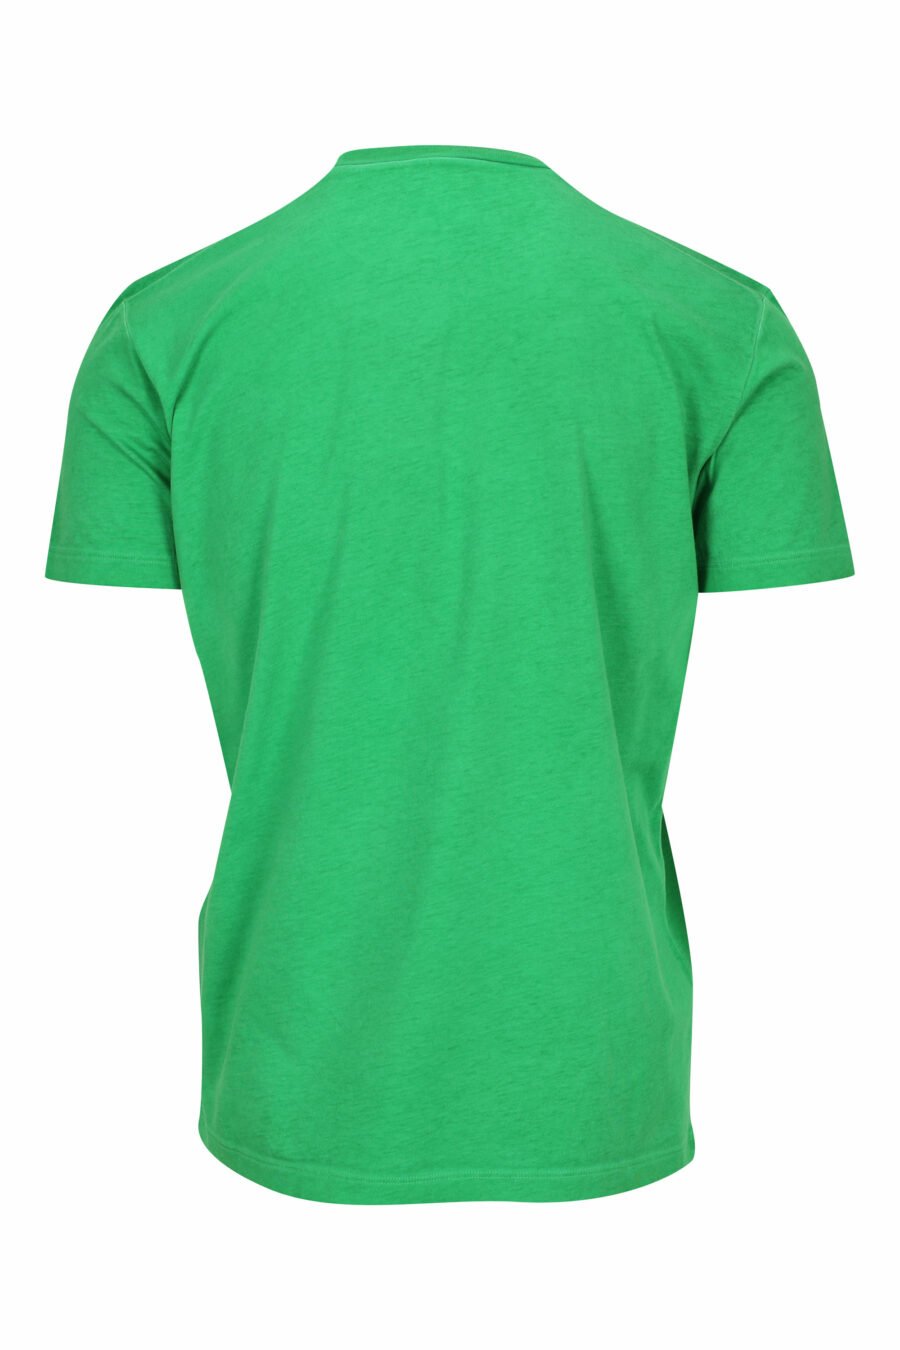 T-shirt verde com maxilogo "top" - 8054148449322 1